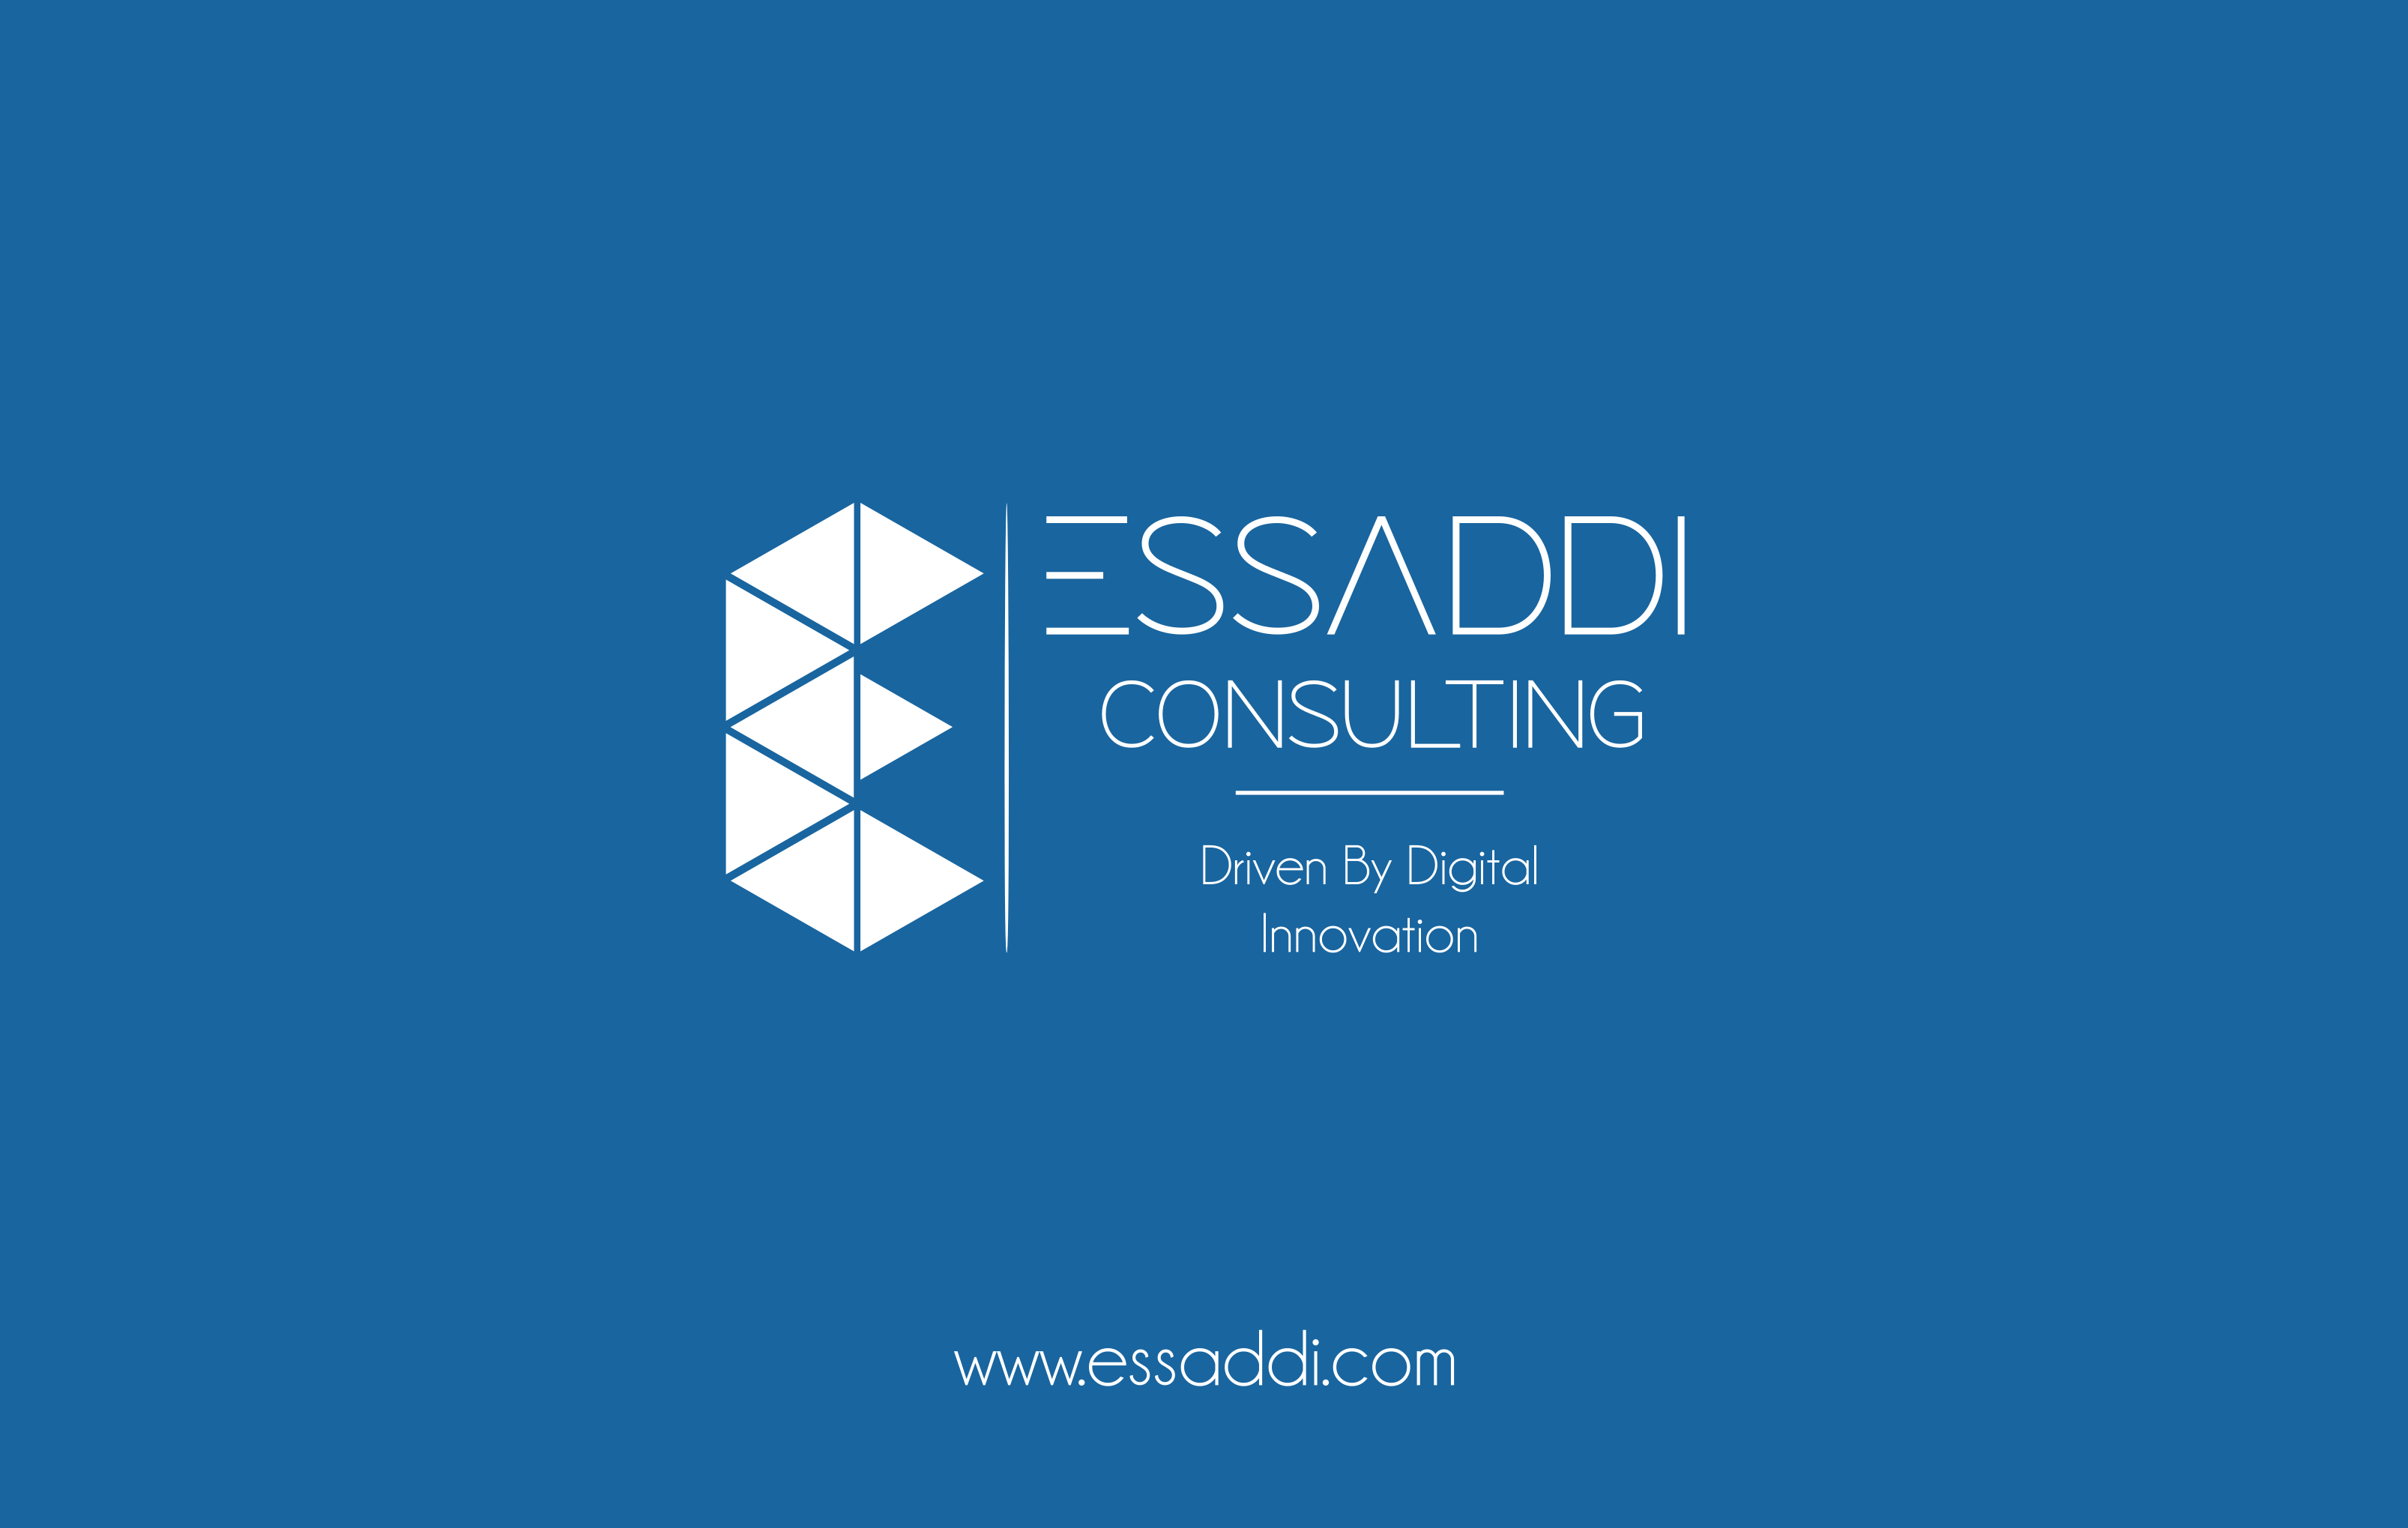 ESSADDI Consulting - Driven by Digital Innovation